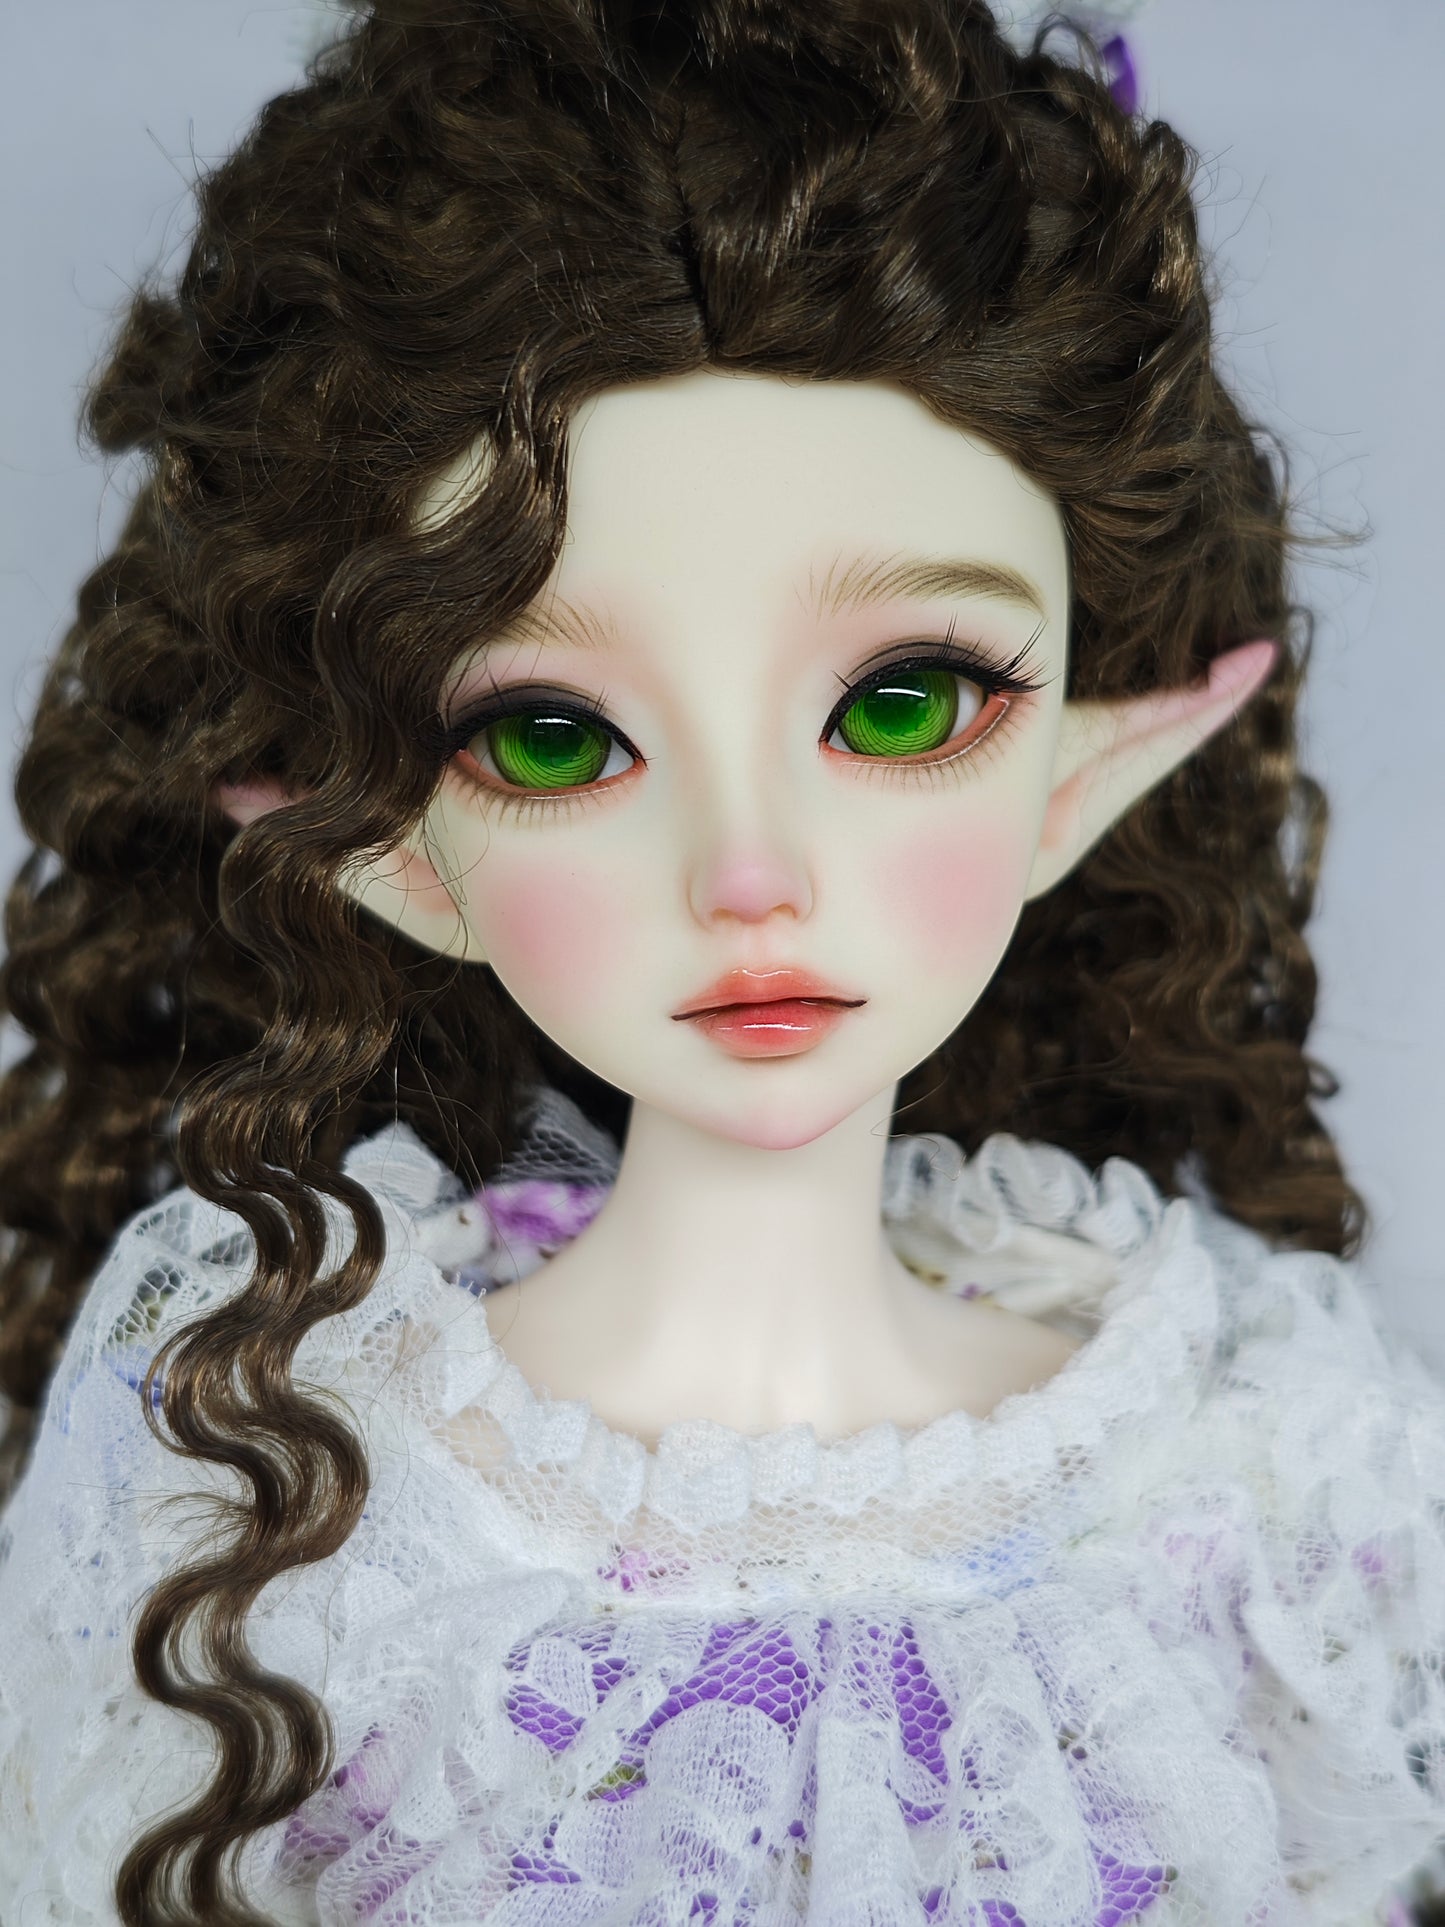 1/4 girl doll Alyssa in normal skin